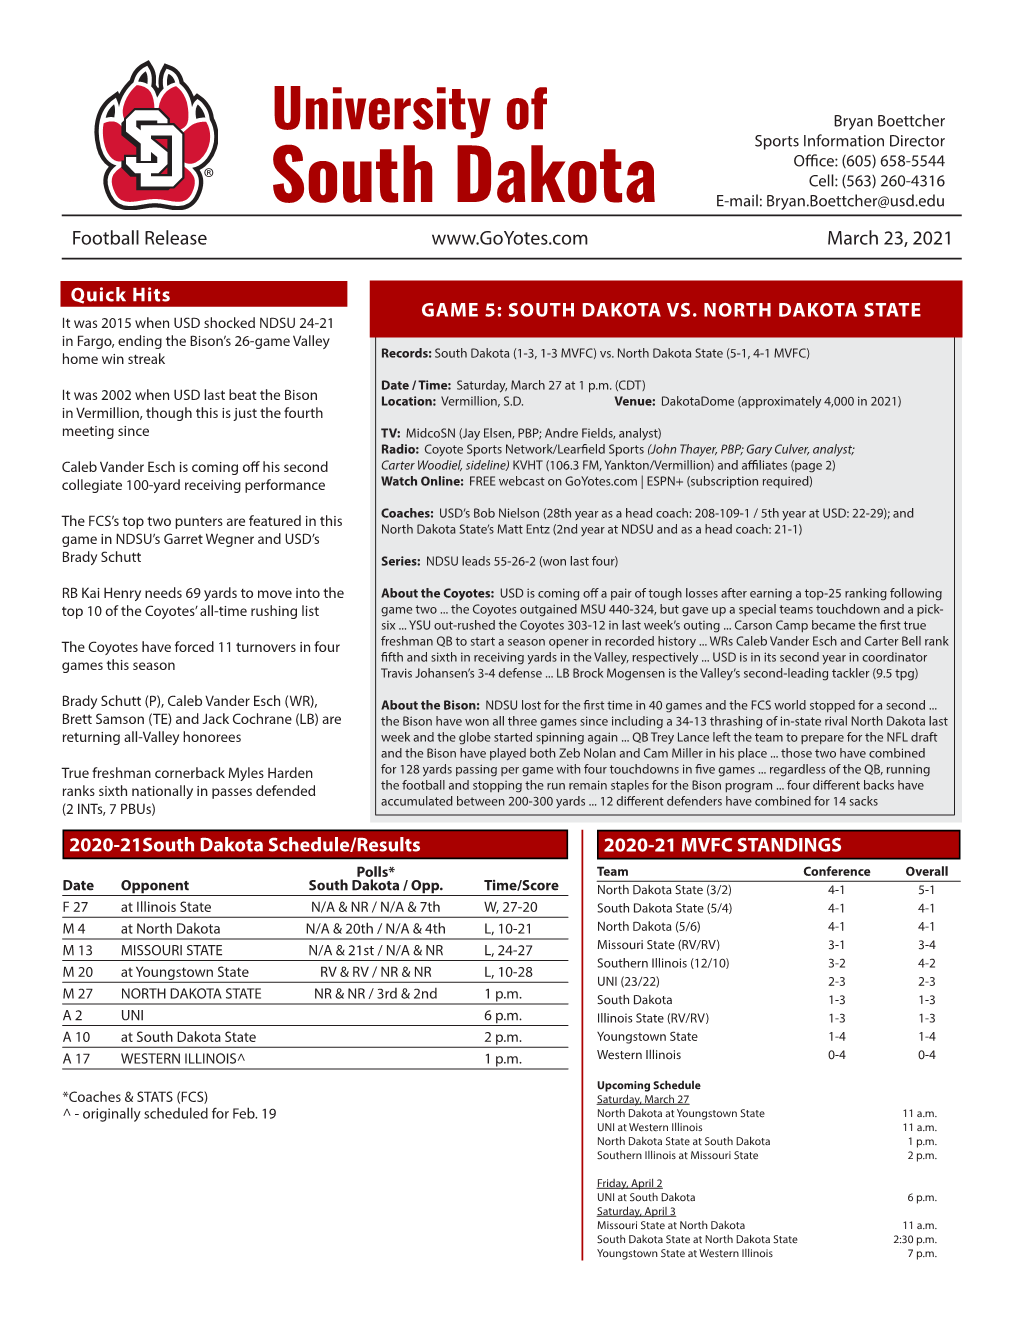 South Dakota E-Mail: Bryan.Boettcher@Usd.Edu Football Release March 23, 2021